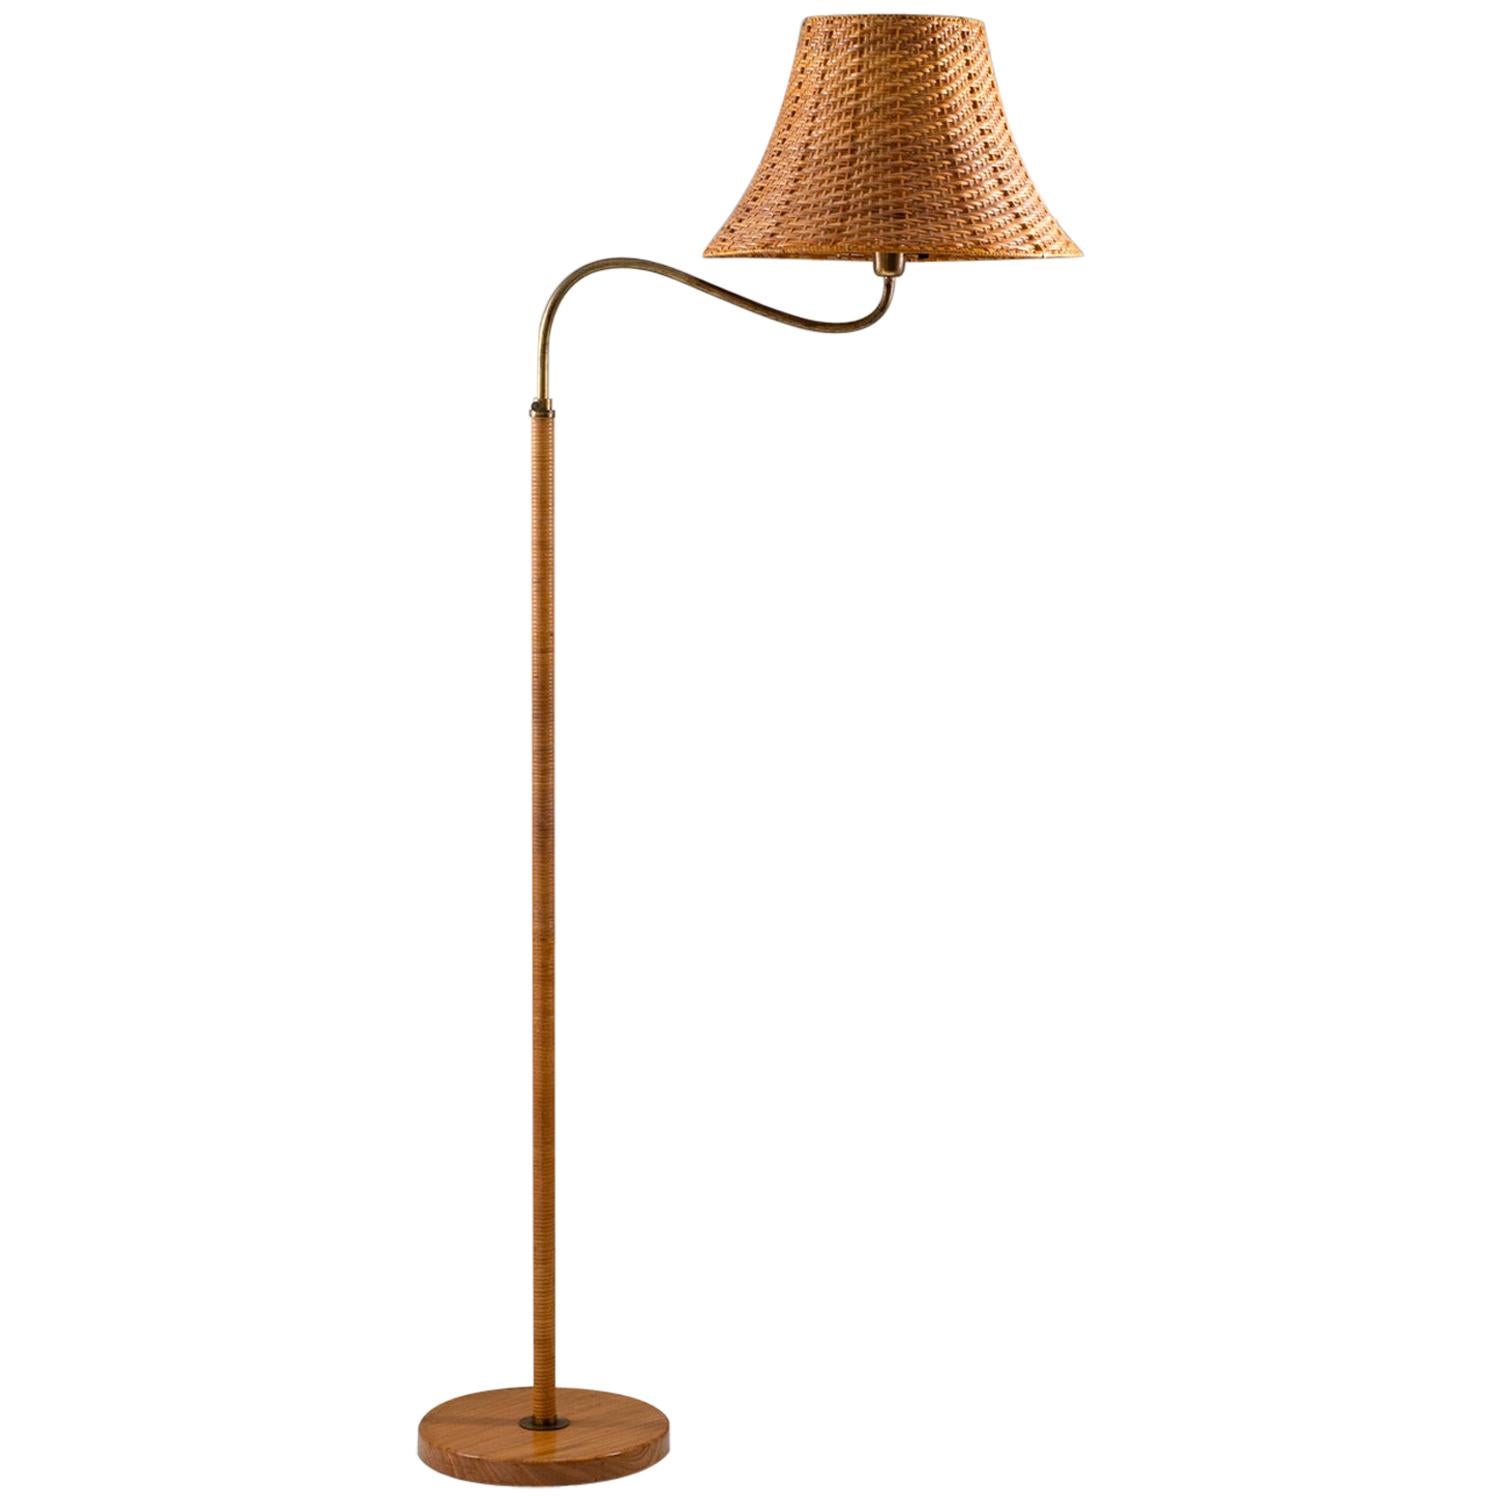 Swedish Modern Midcentury Floor Lamp in Brass and Rattan, 1940s